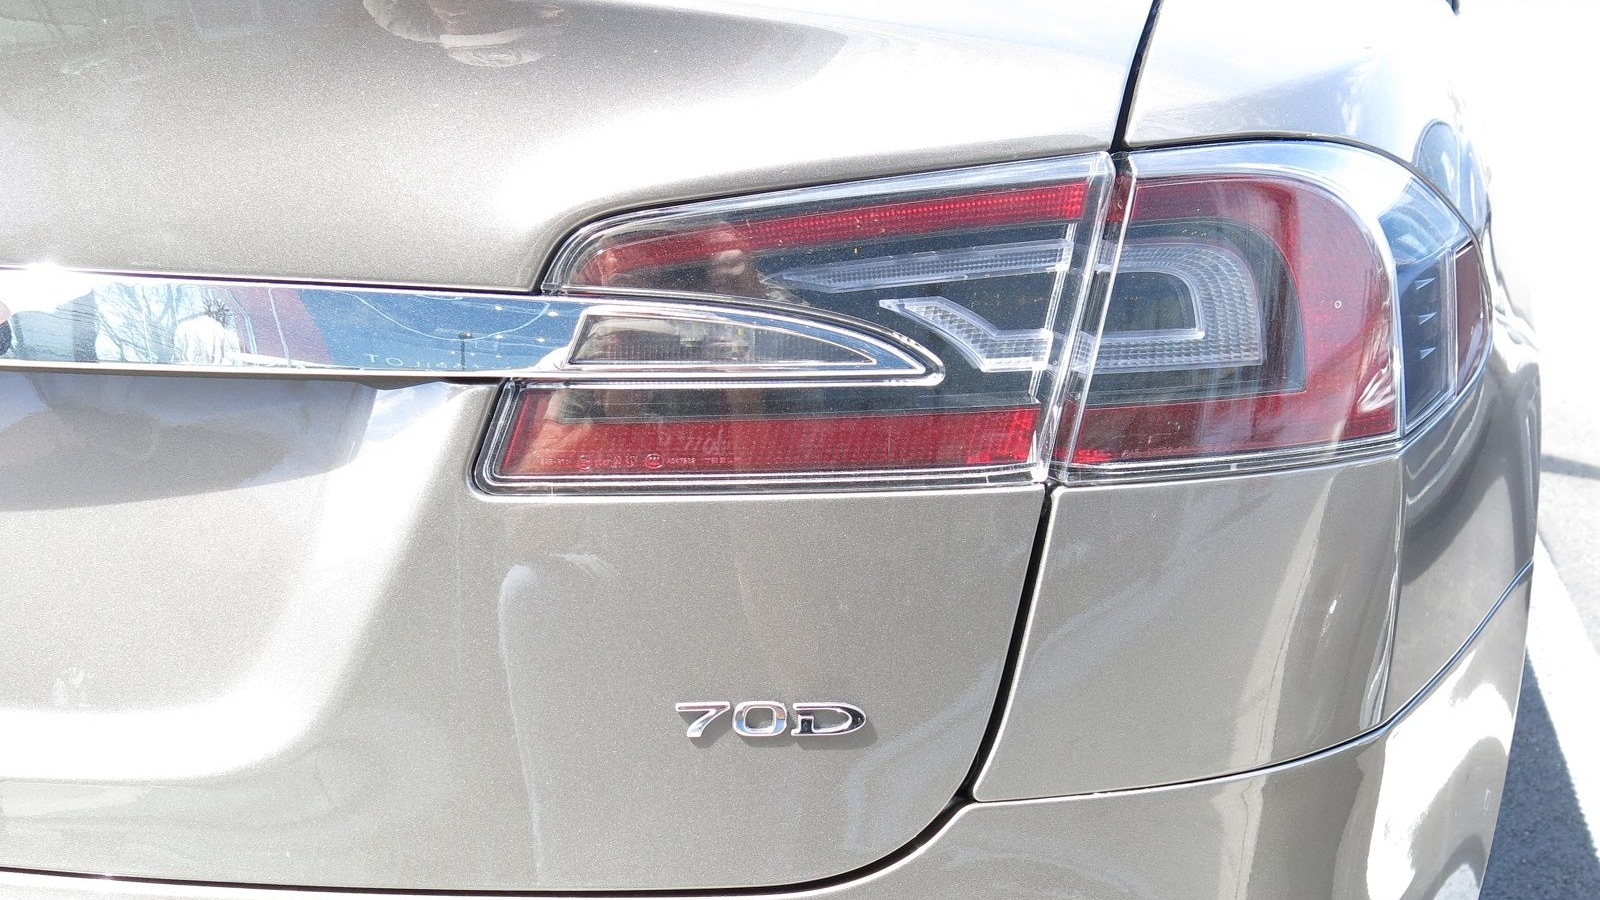 2015 Tesla Model S 70D, Apr 2015  [photo: David Noland]